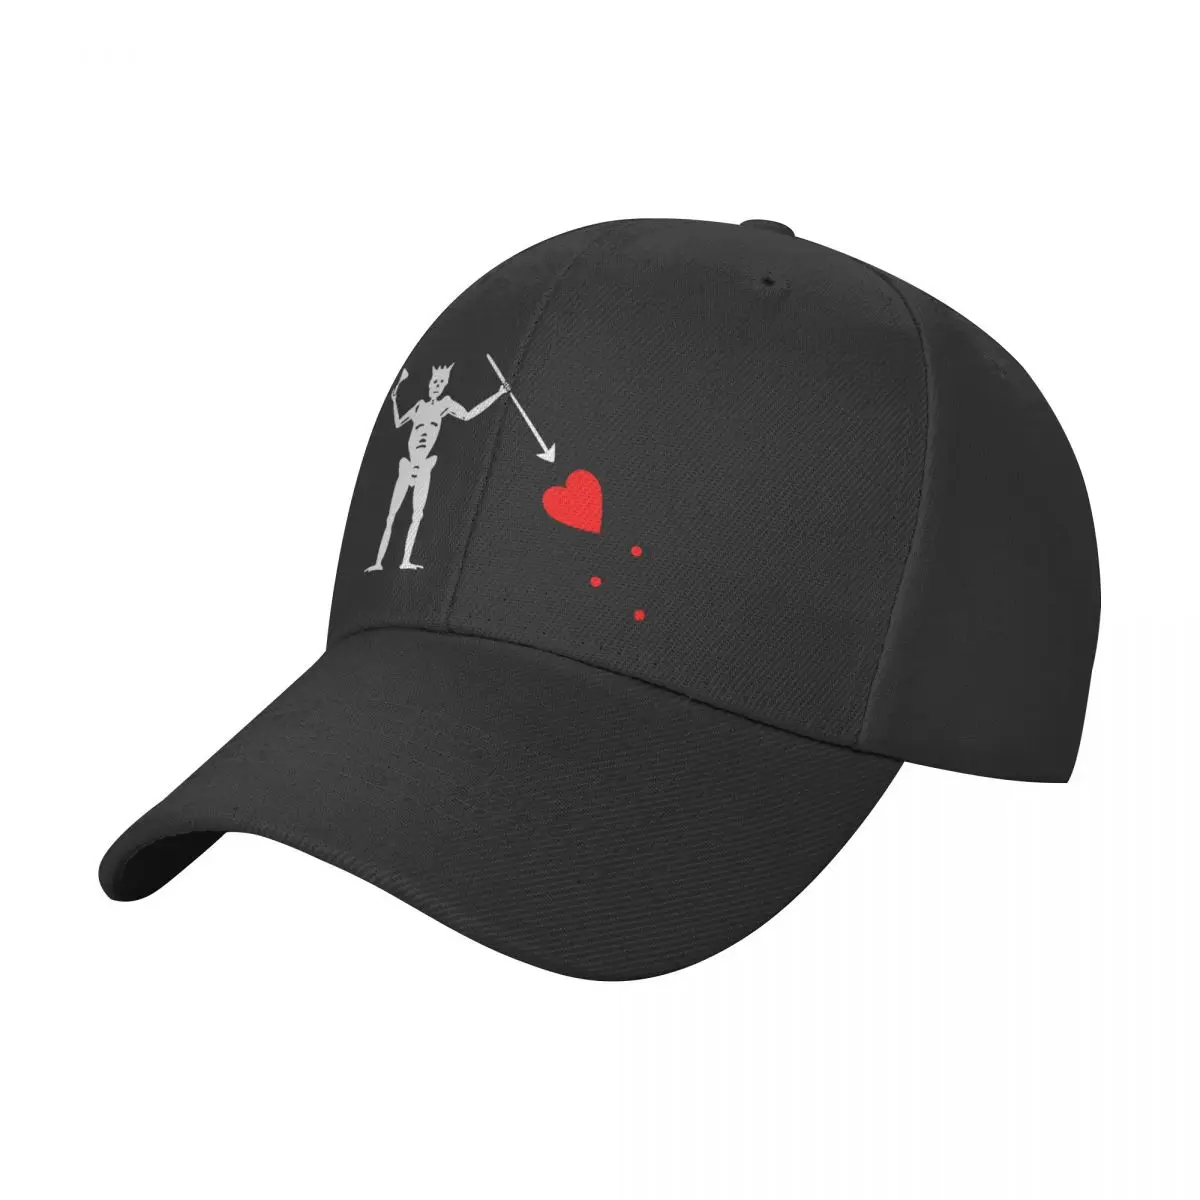 

Blackbeard Edward 2022 New Baseball Cap for Women and Men Fashion Visors Cap Boys Girls Casual Snapback Hat